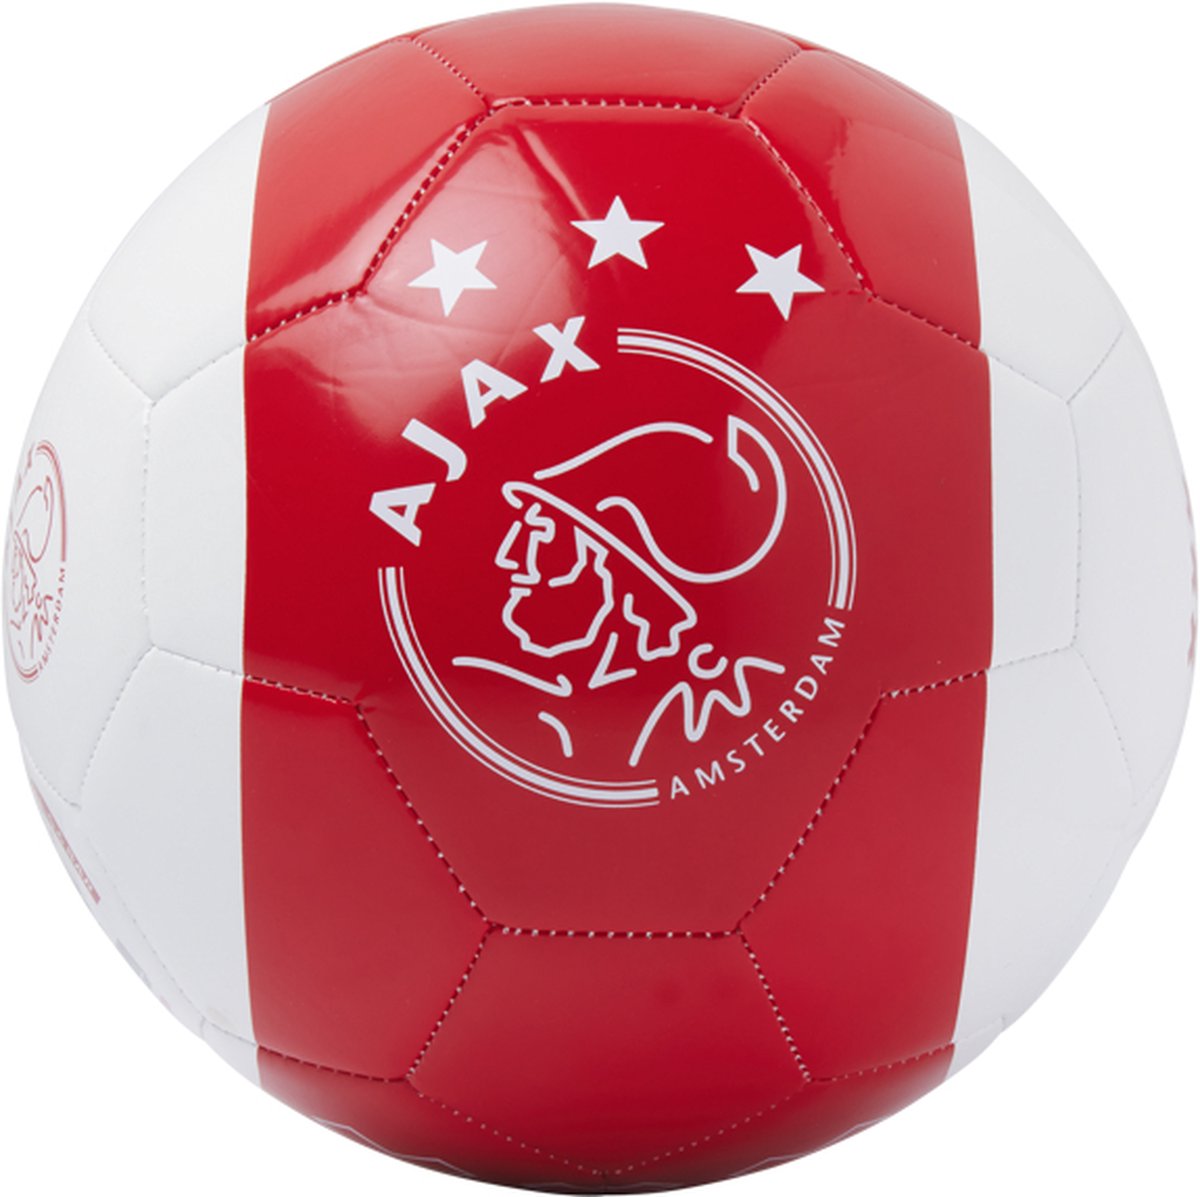 Ajax-bal wit/rood/wit logo kruizen - Ajax